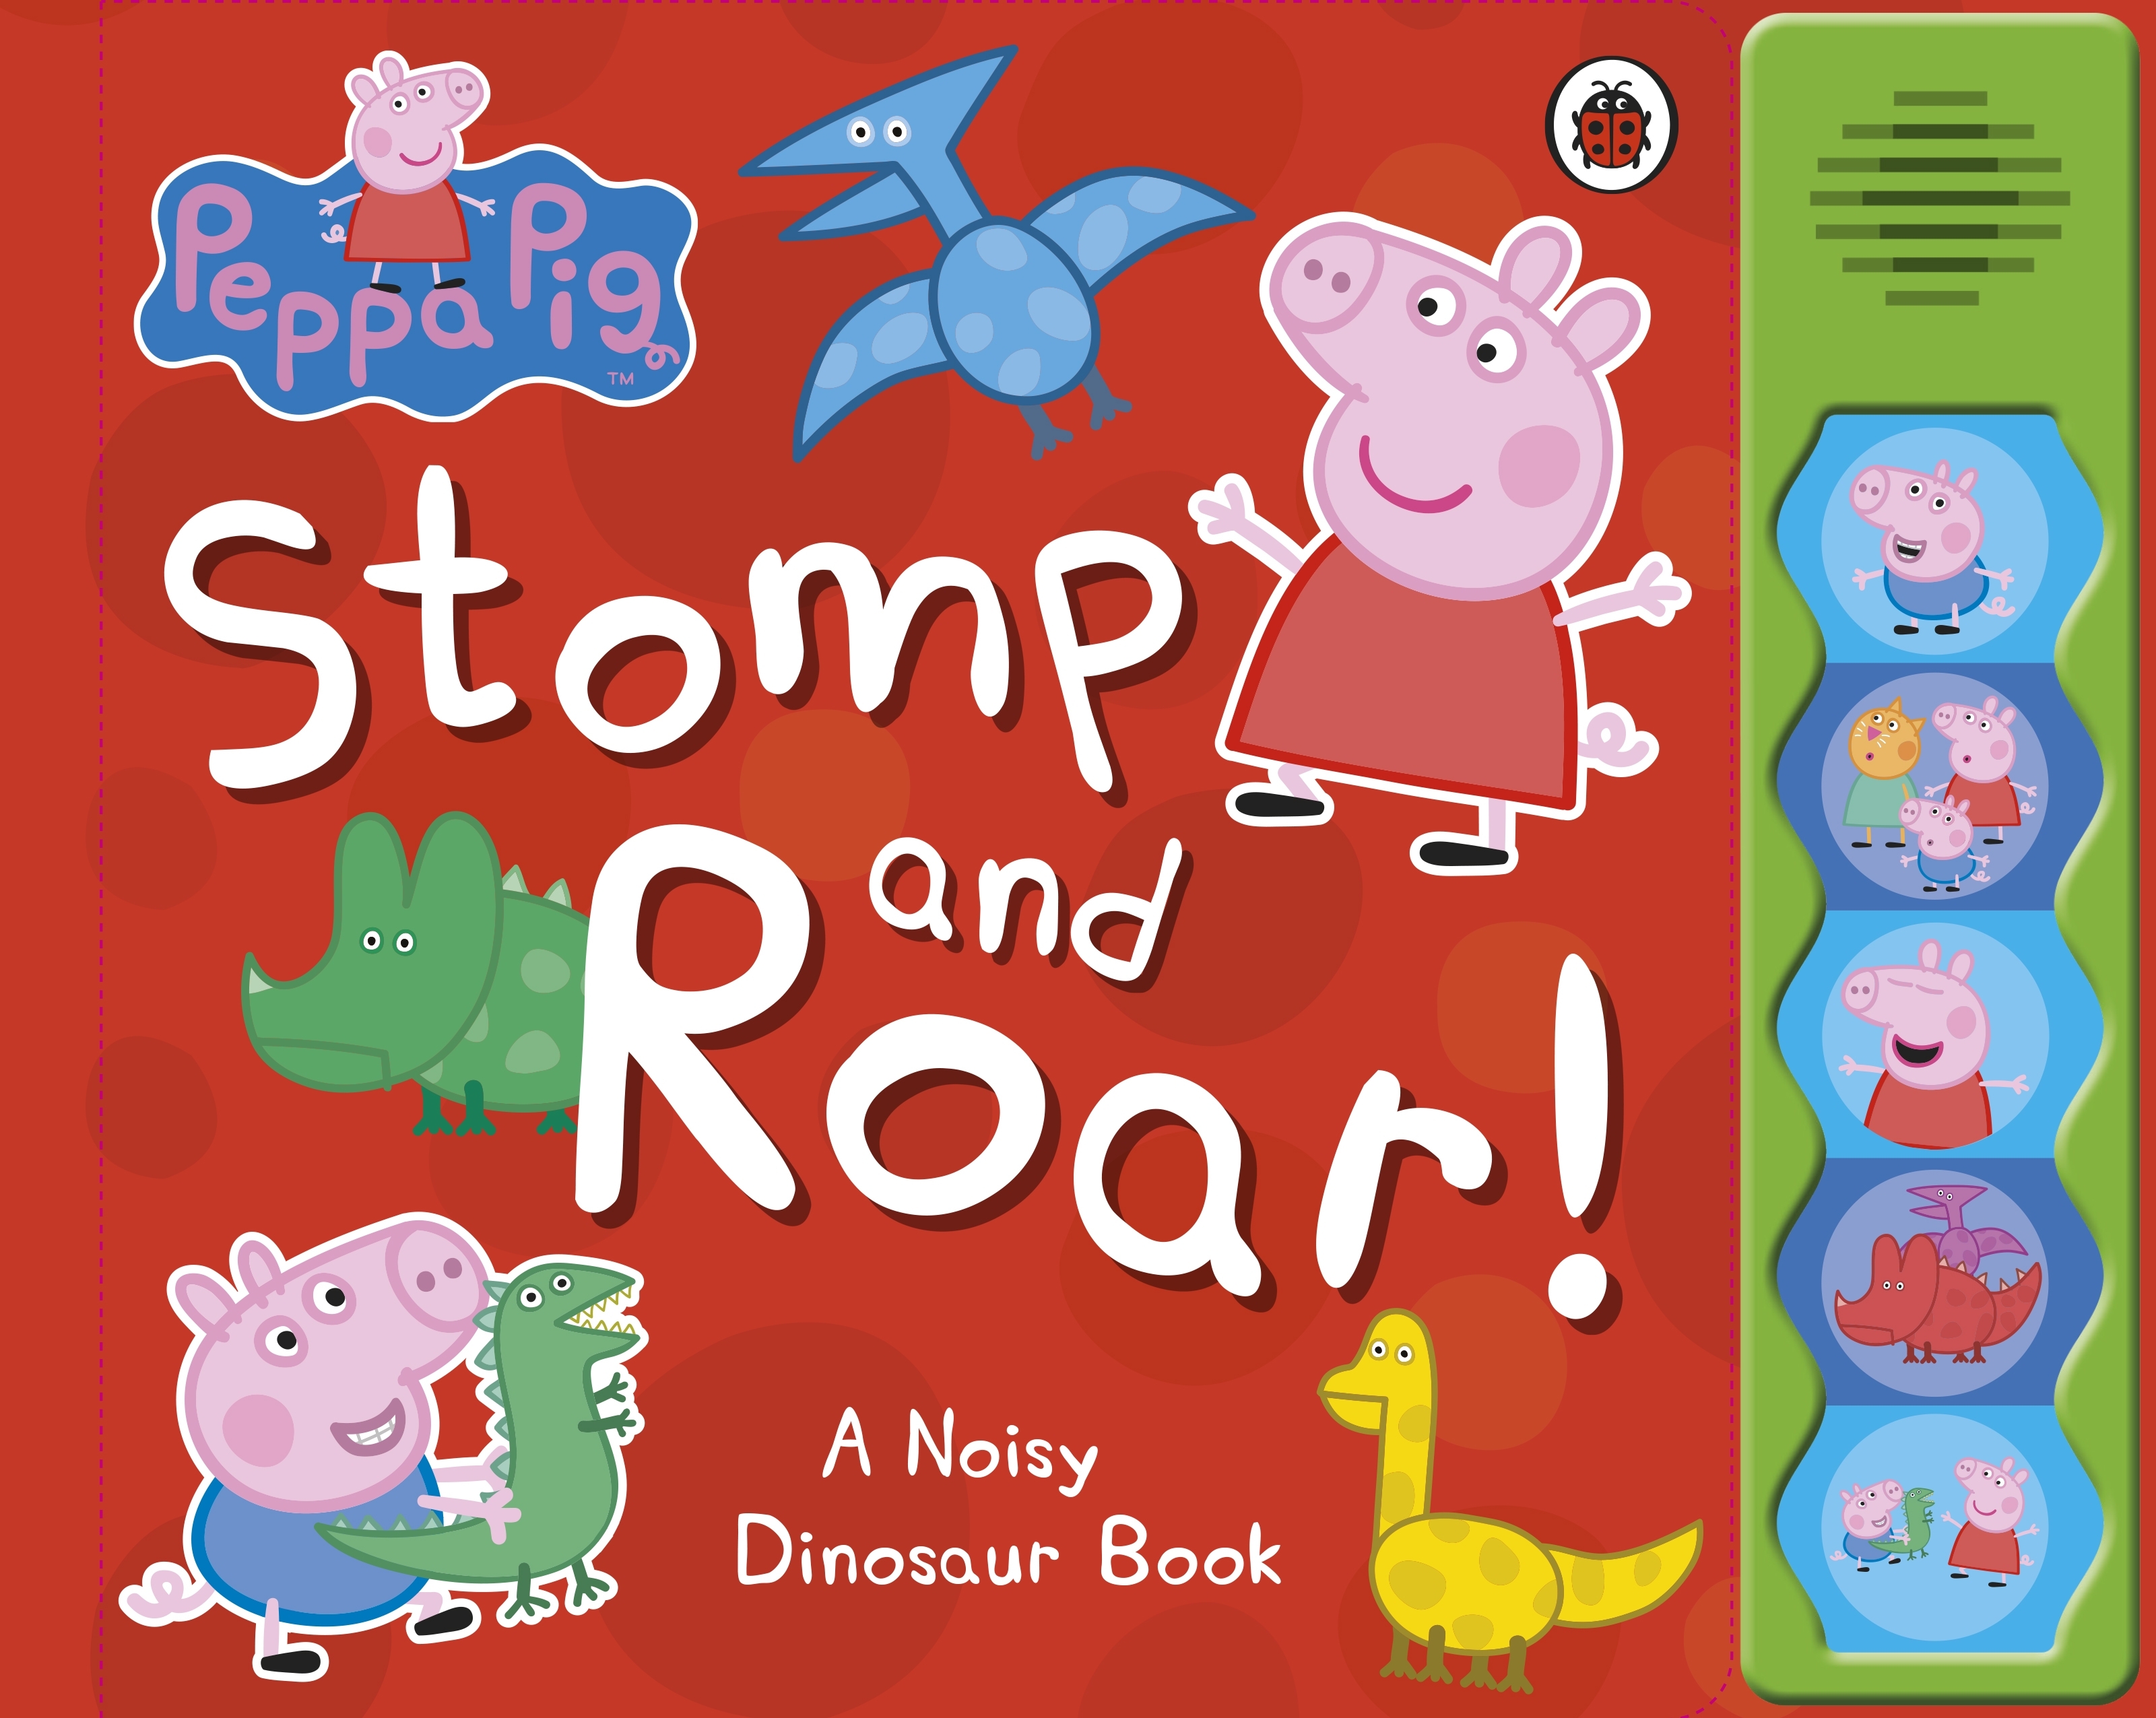 Peppa Pig Stomp and Roar!